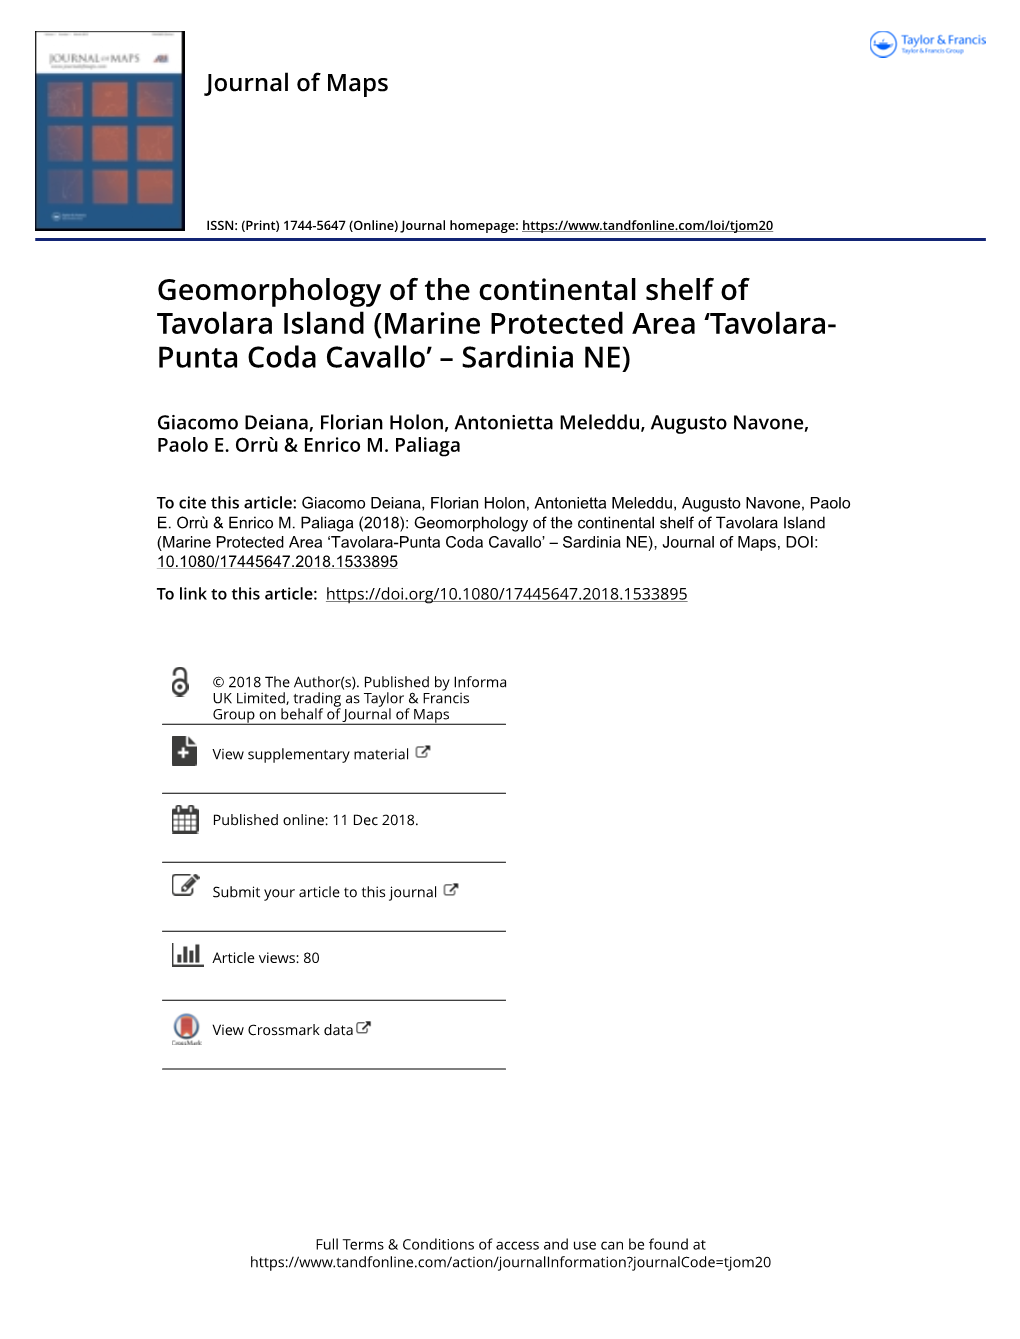 Geomorphology of the Continental Shelf of Tavolara Island (Marine Protected Area 'Tavolara- Punta Coda Cavallo' – Sardinia